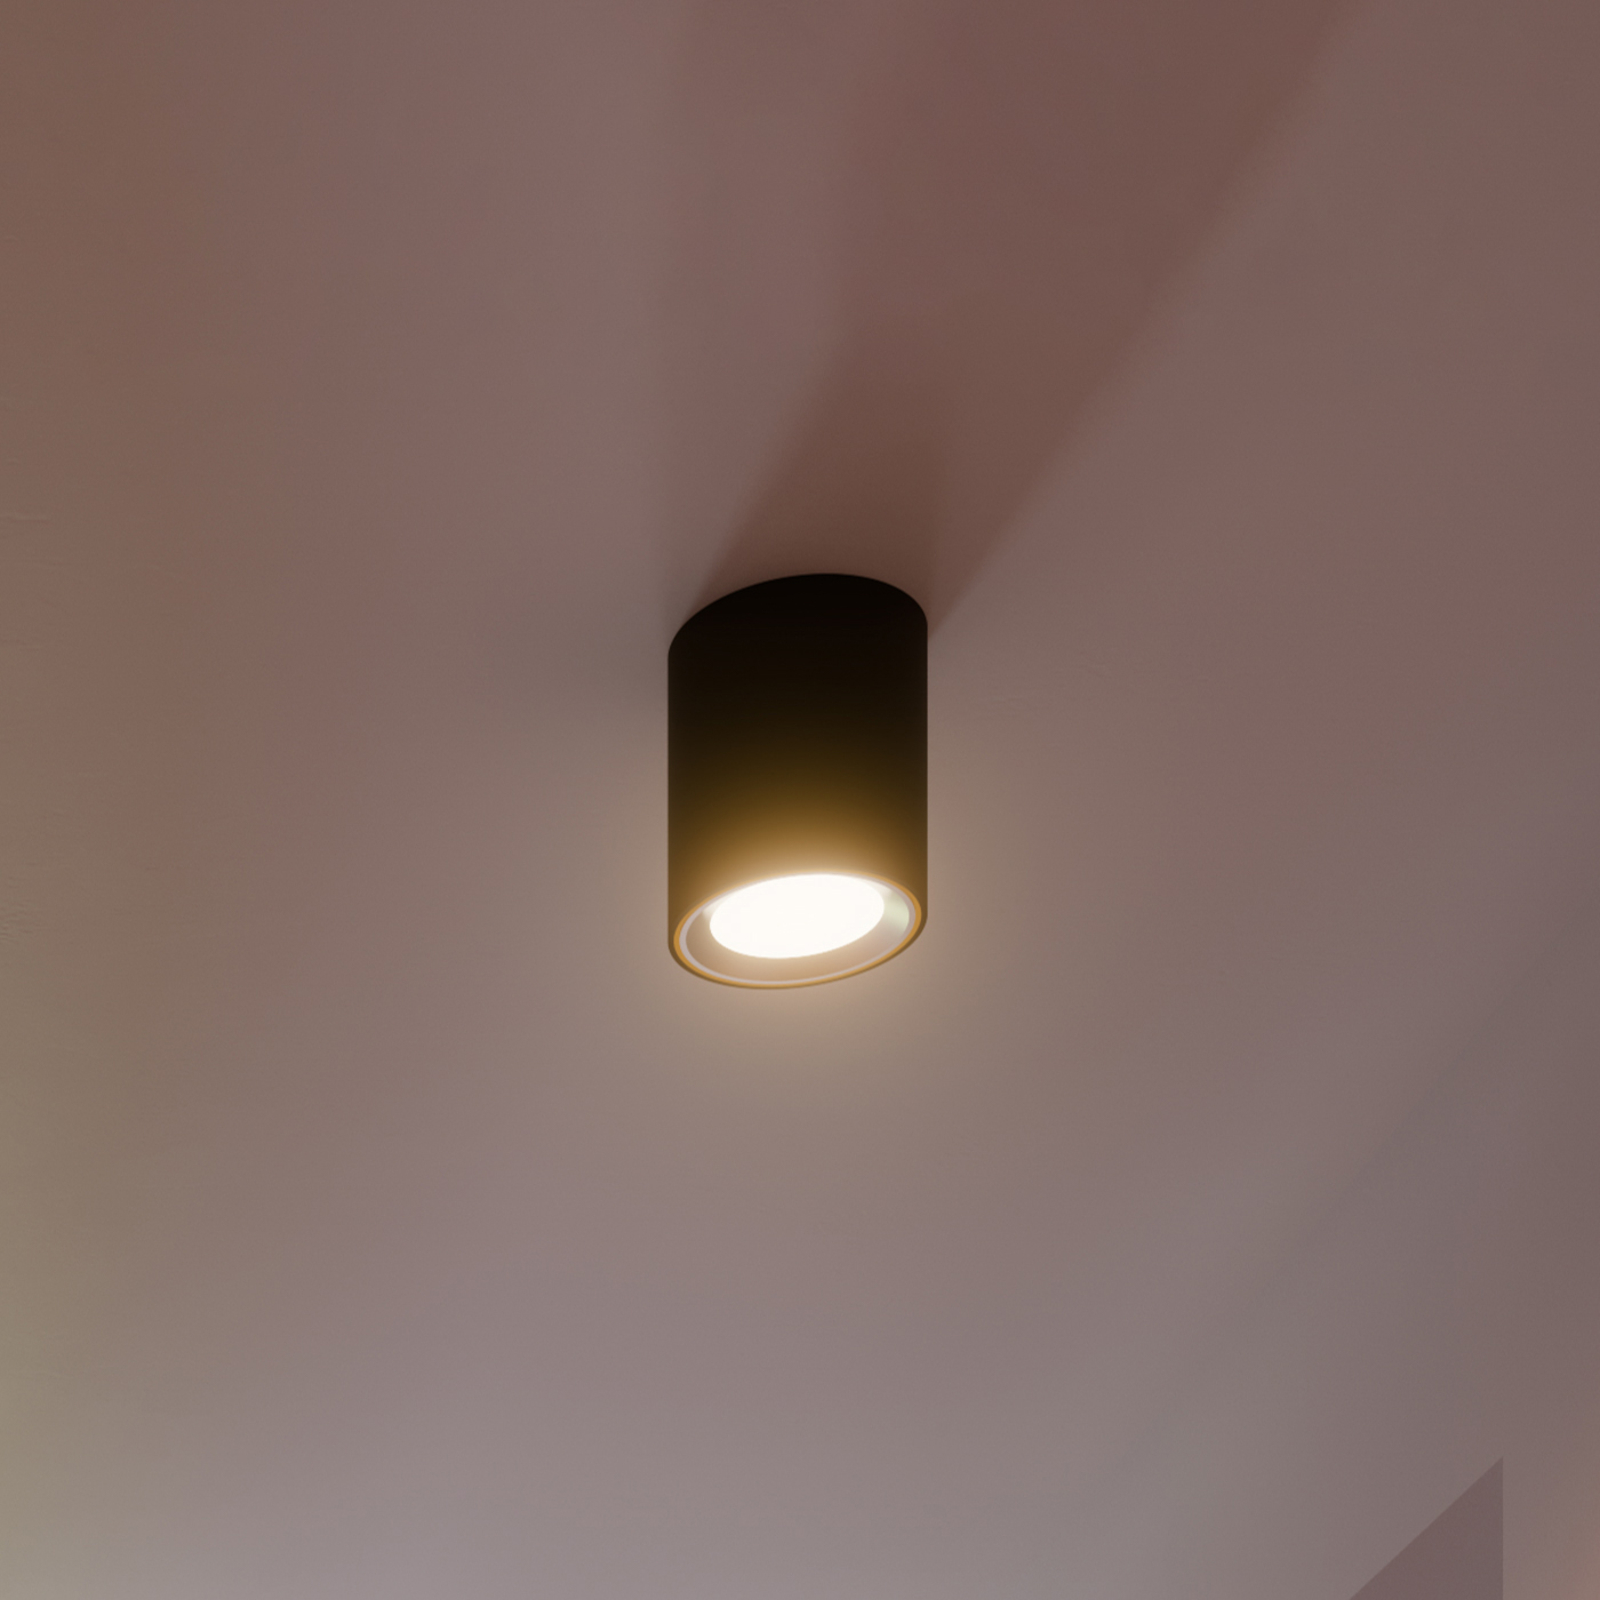 Stropný LED reflektor Landon Smart, čierny, výška 14 cm